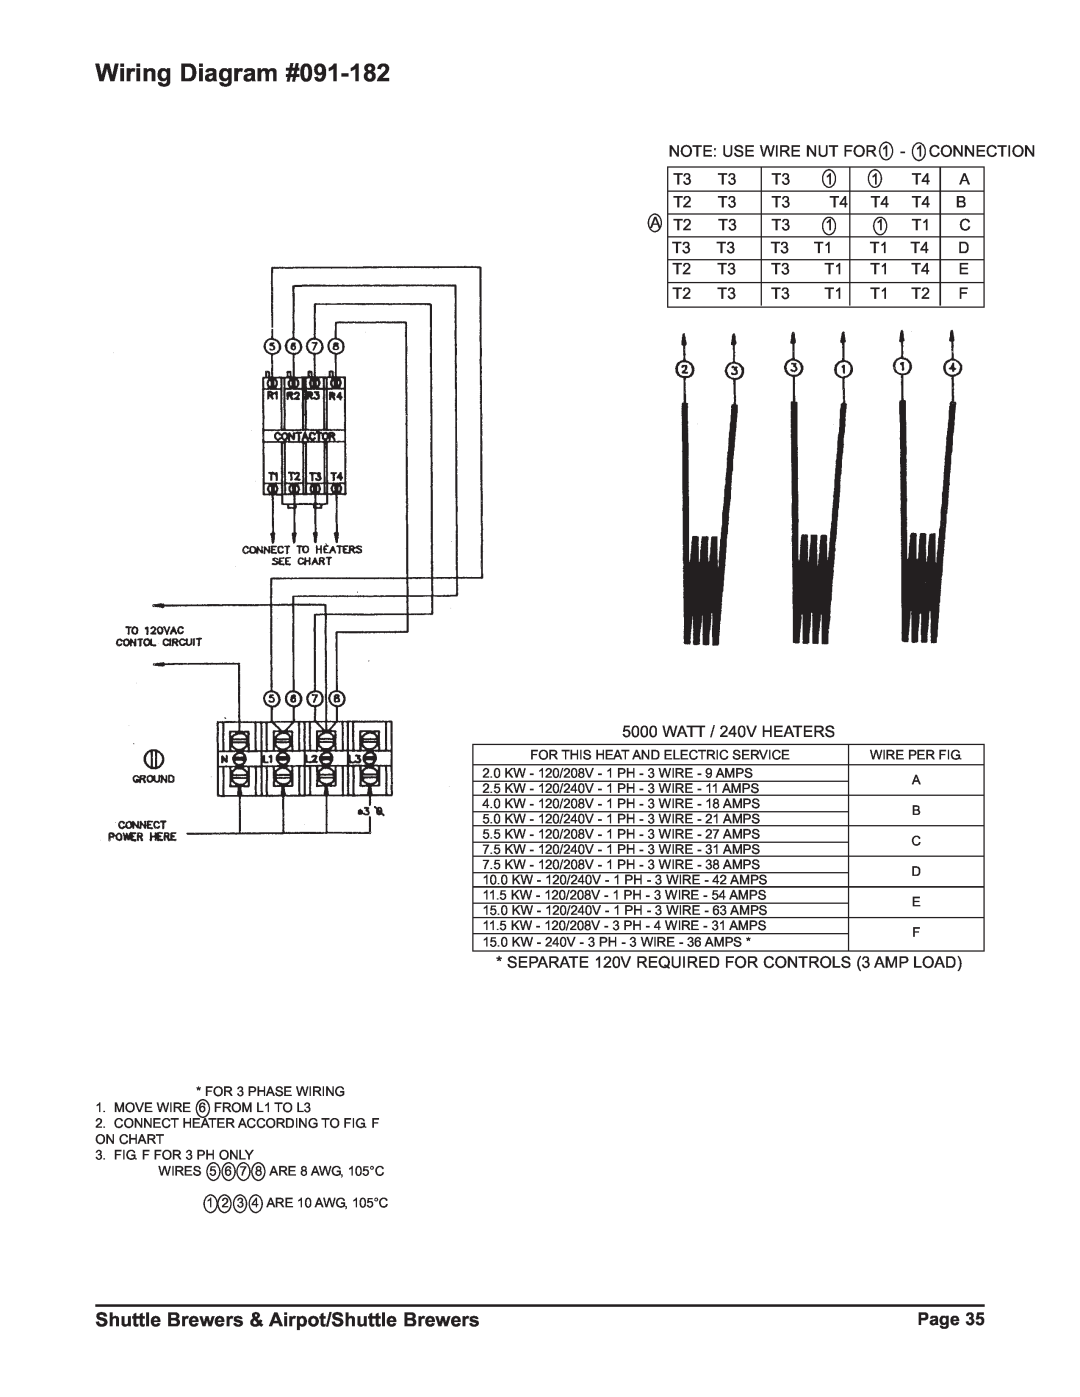 Grindmaster P400ESHP instruction manual Wiring Diagram #091-182, Shuttle Brewers & Airpot/Shuttle Brewers 